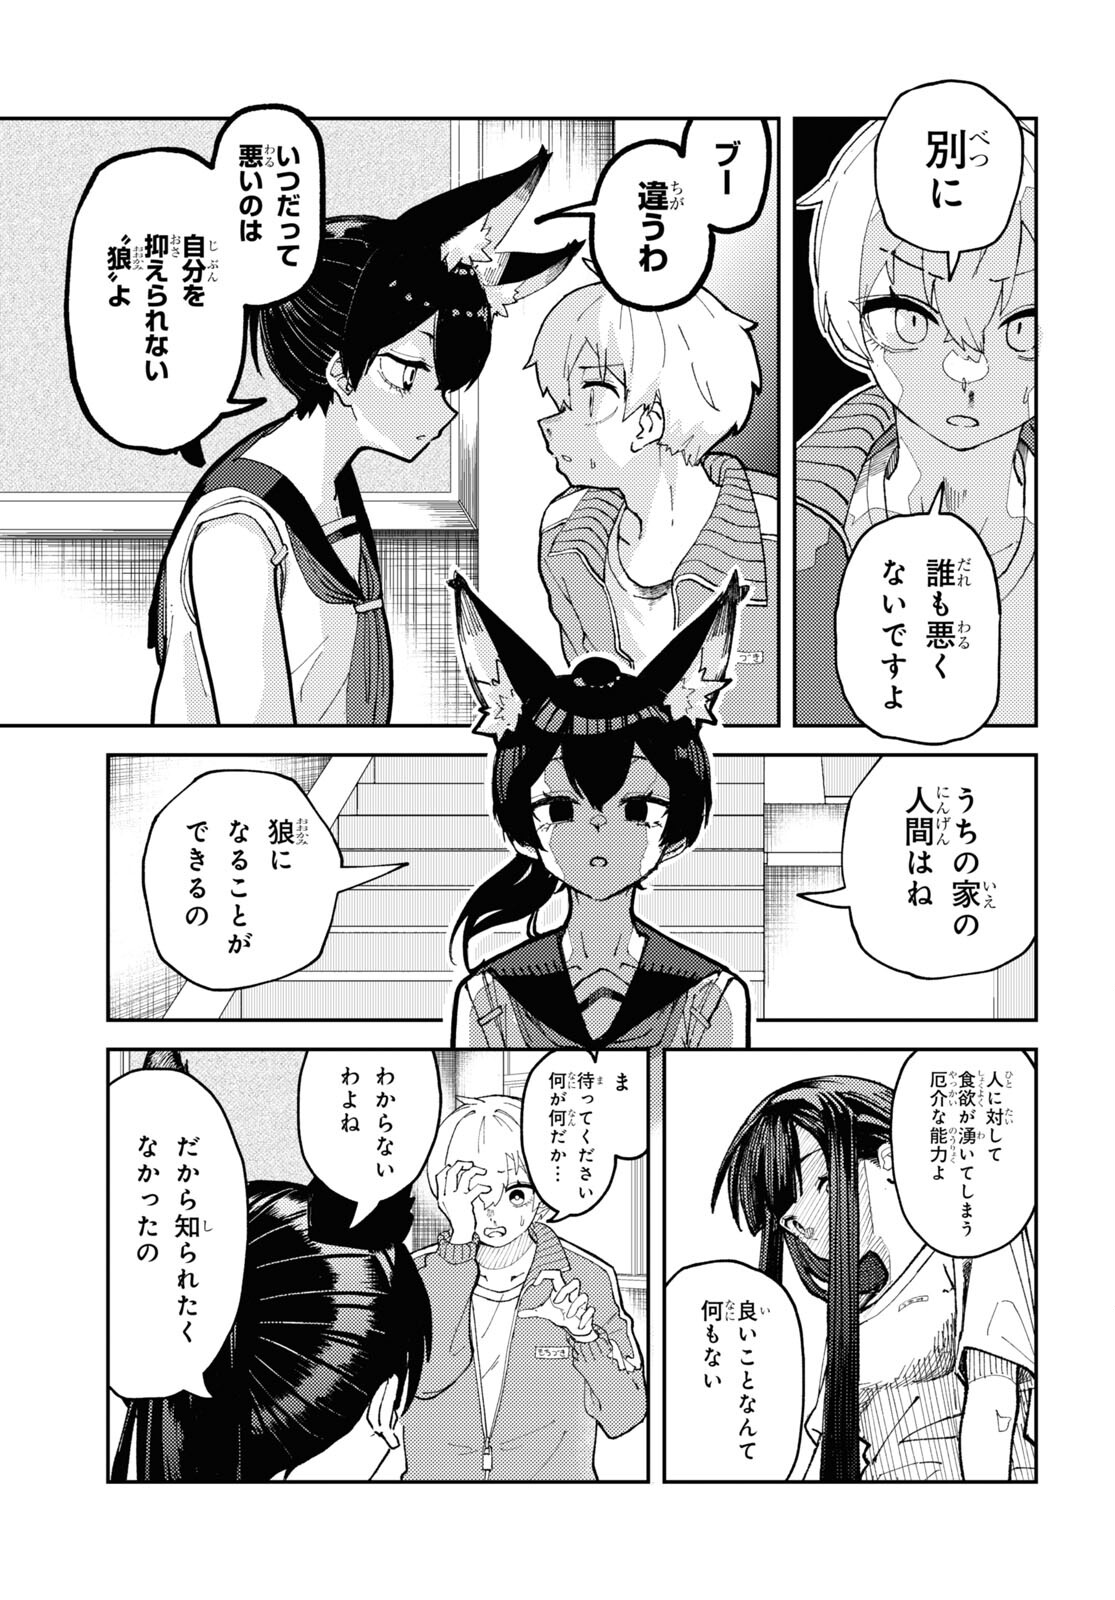 Garuru Girl - Chapter 1 - Page 30